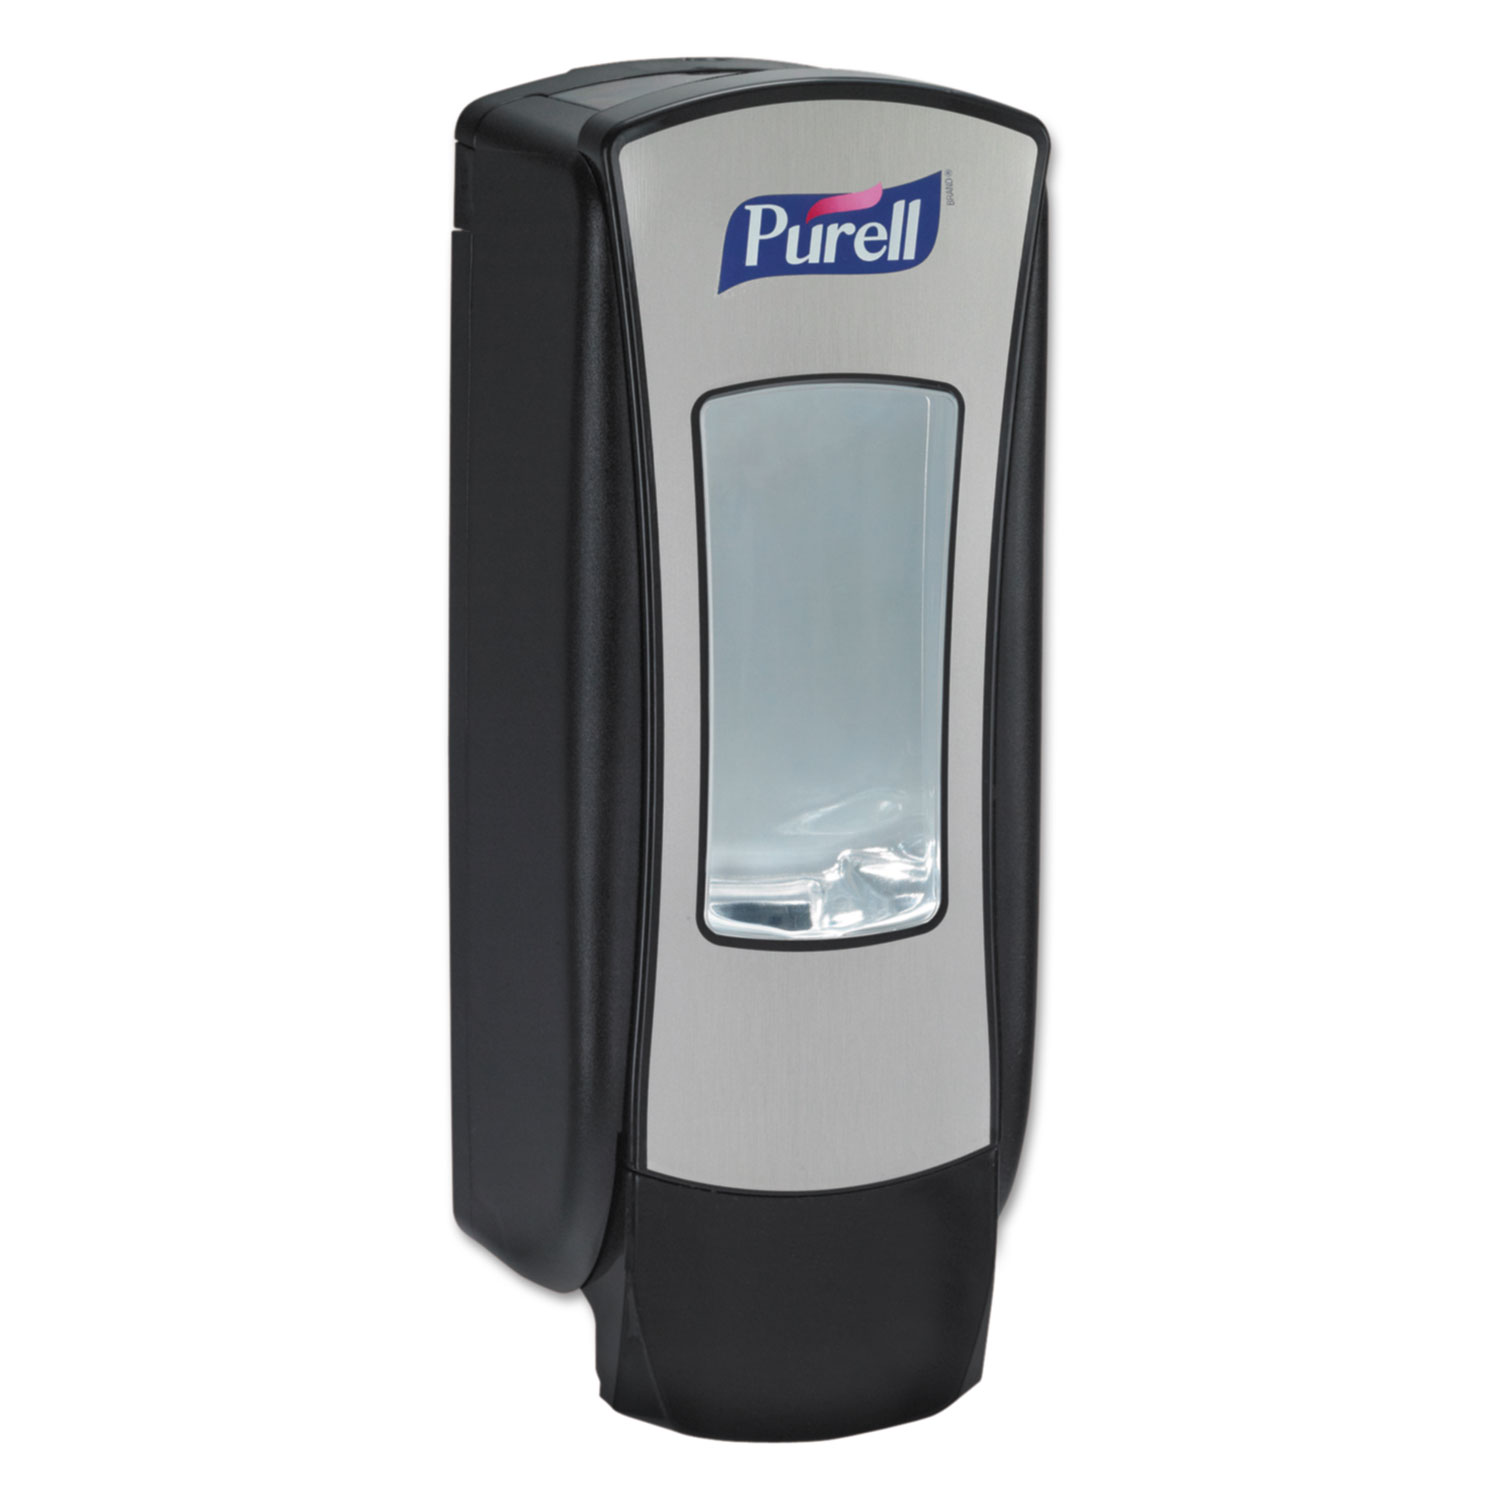  PURELL 8828-06 ADX-12 Dispenser, 1200 mL, 4.5 x 4 x 11.25, Chrome/Black (GOJ882806) 